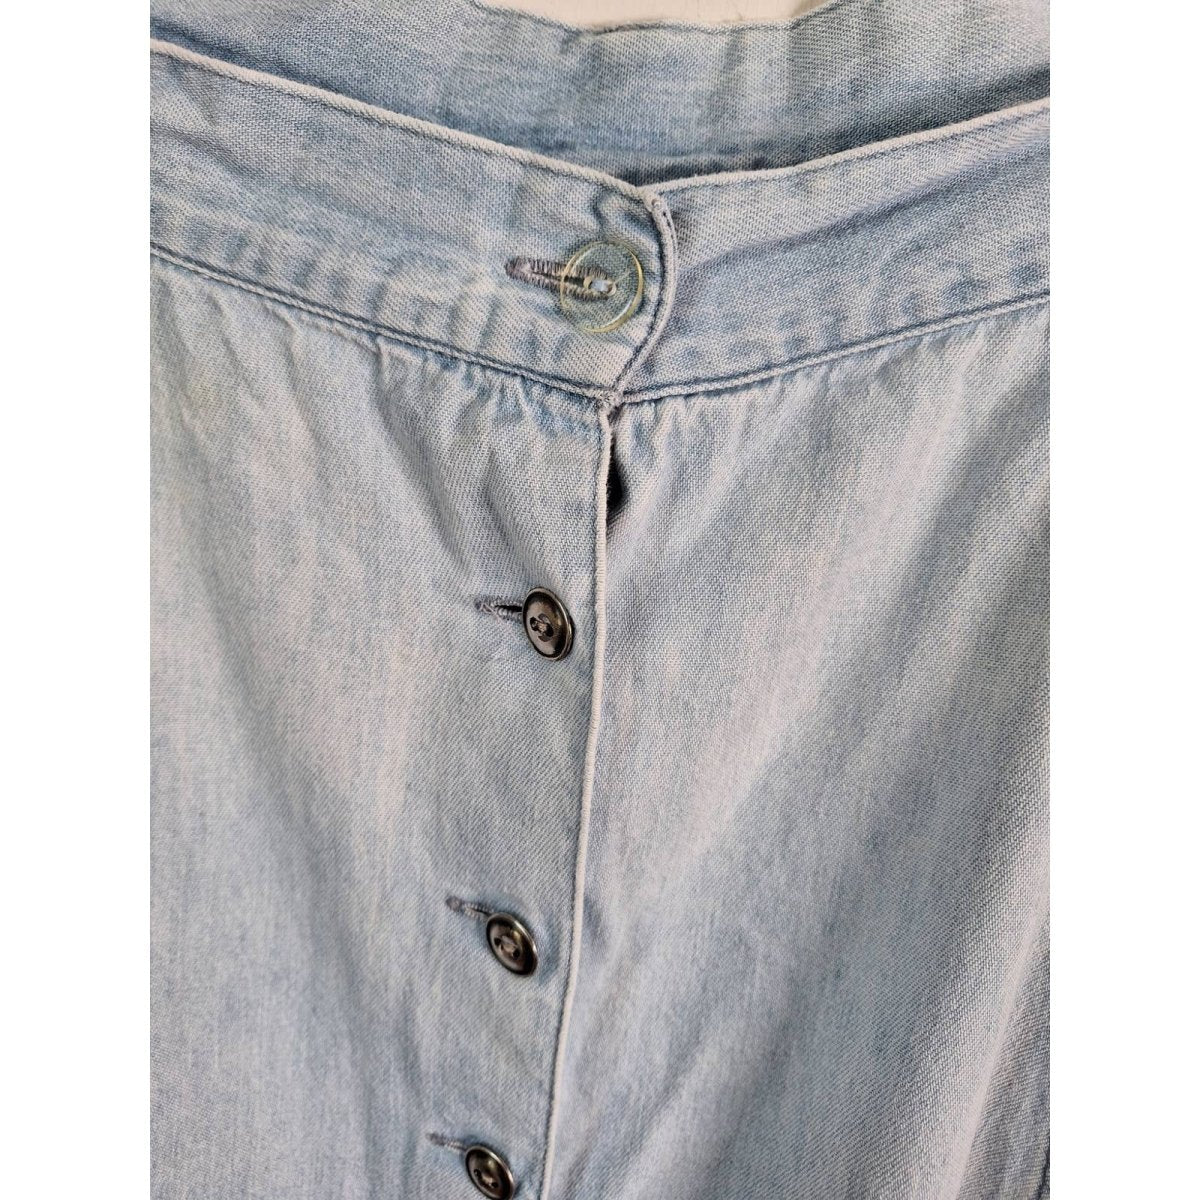 80s Button Front Denim Midi Skirt L/XL Waist 34" to 36" - themallvintage The Mall Vintage